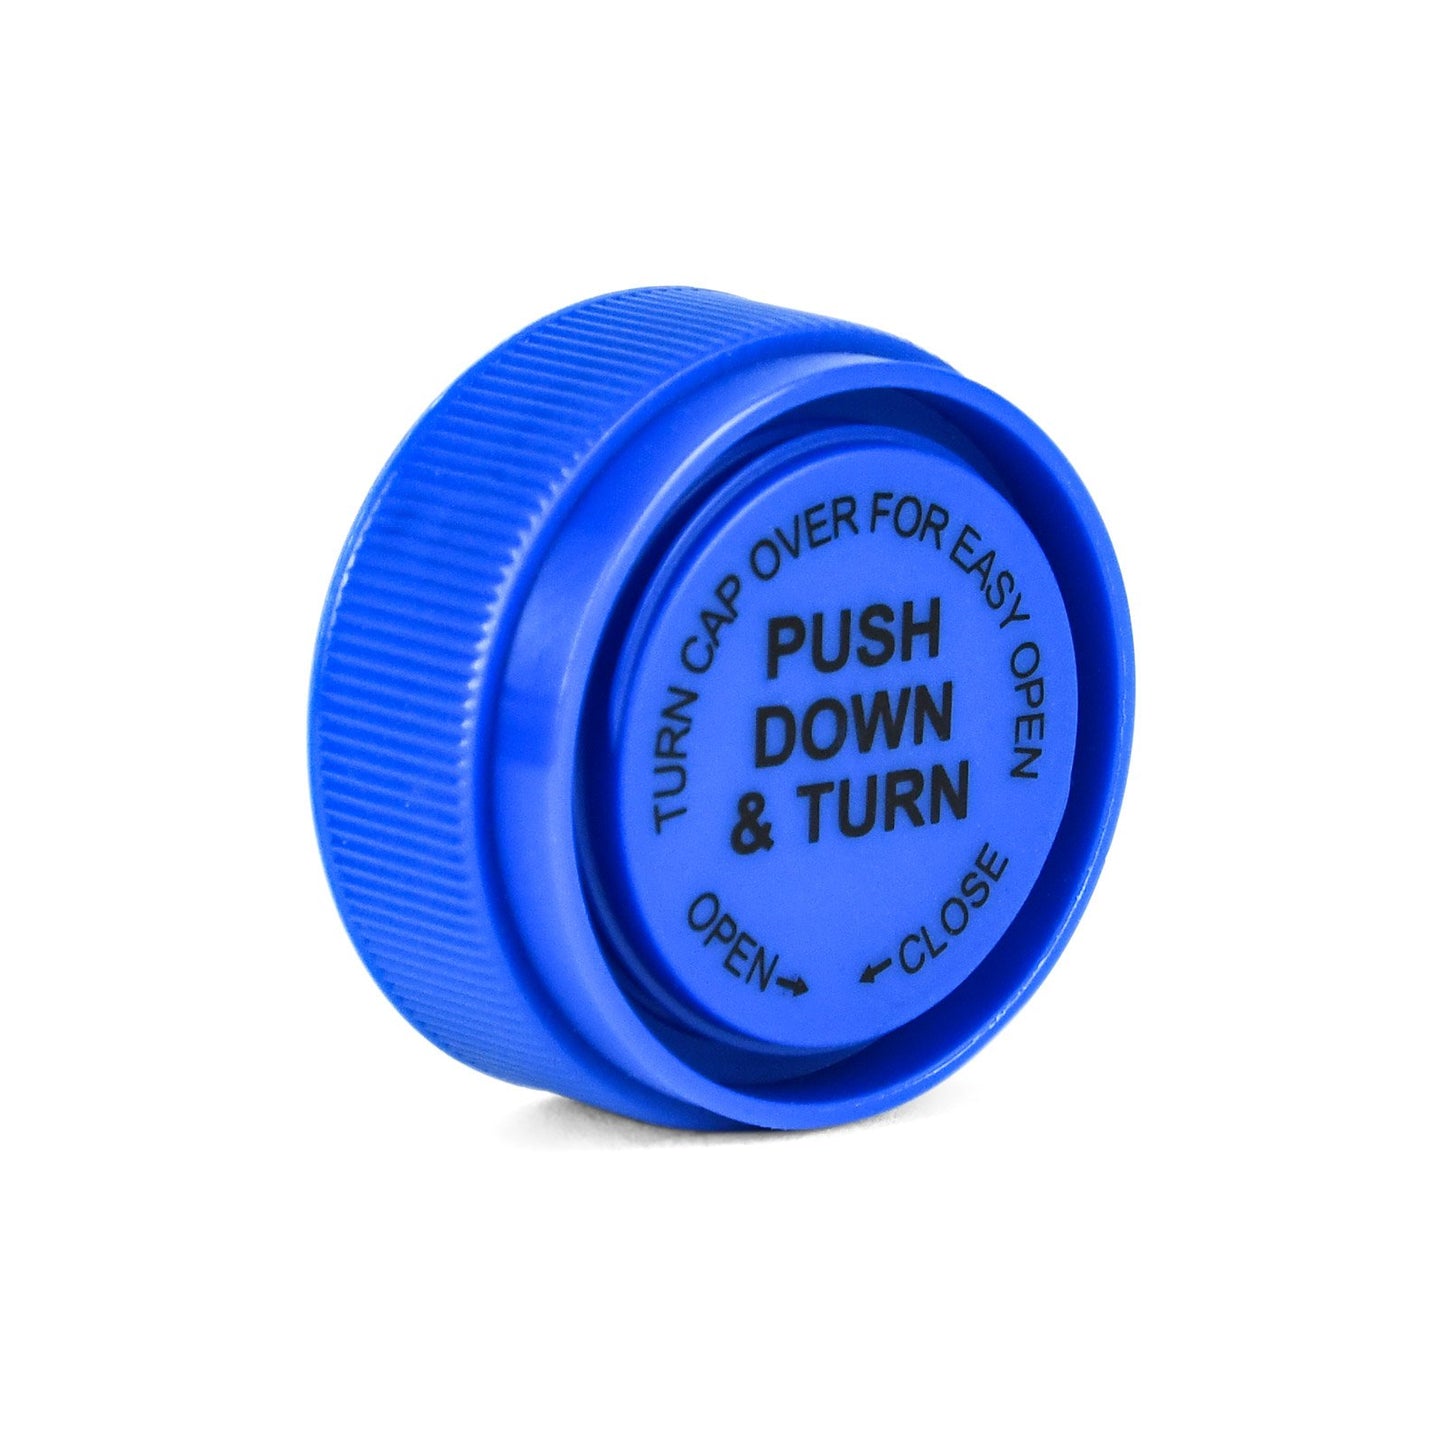 8 Dram Push Down & Turn Cap Opaque Blue - 410 COUNT